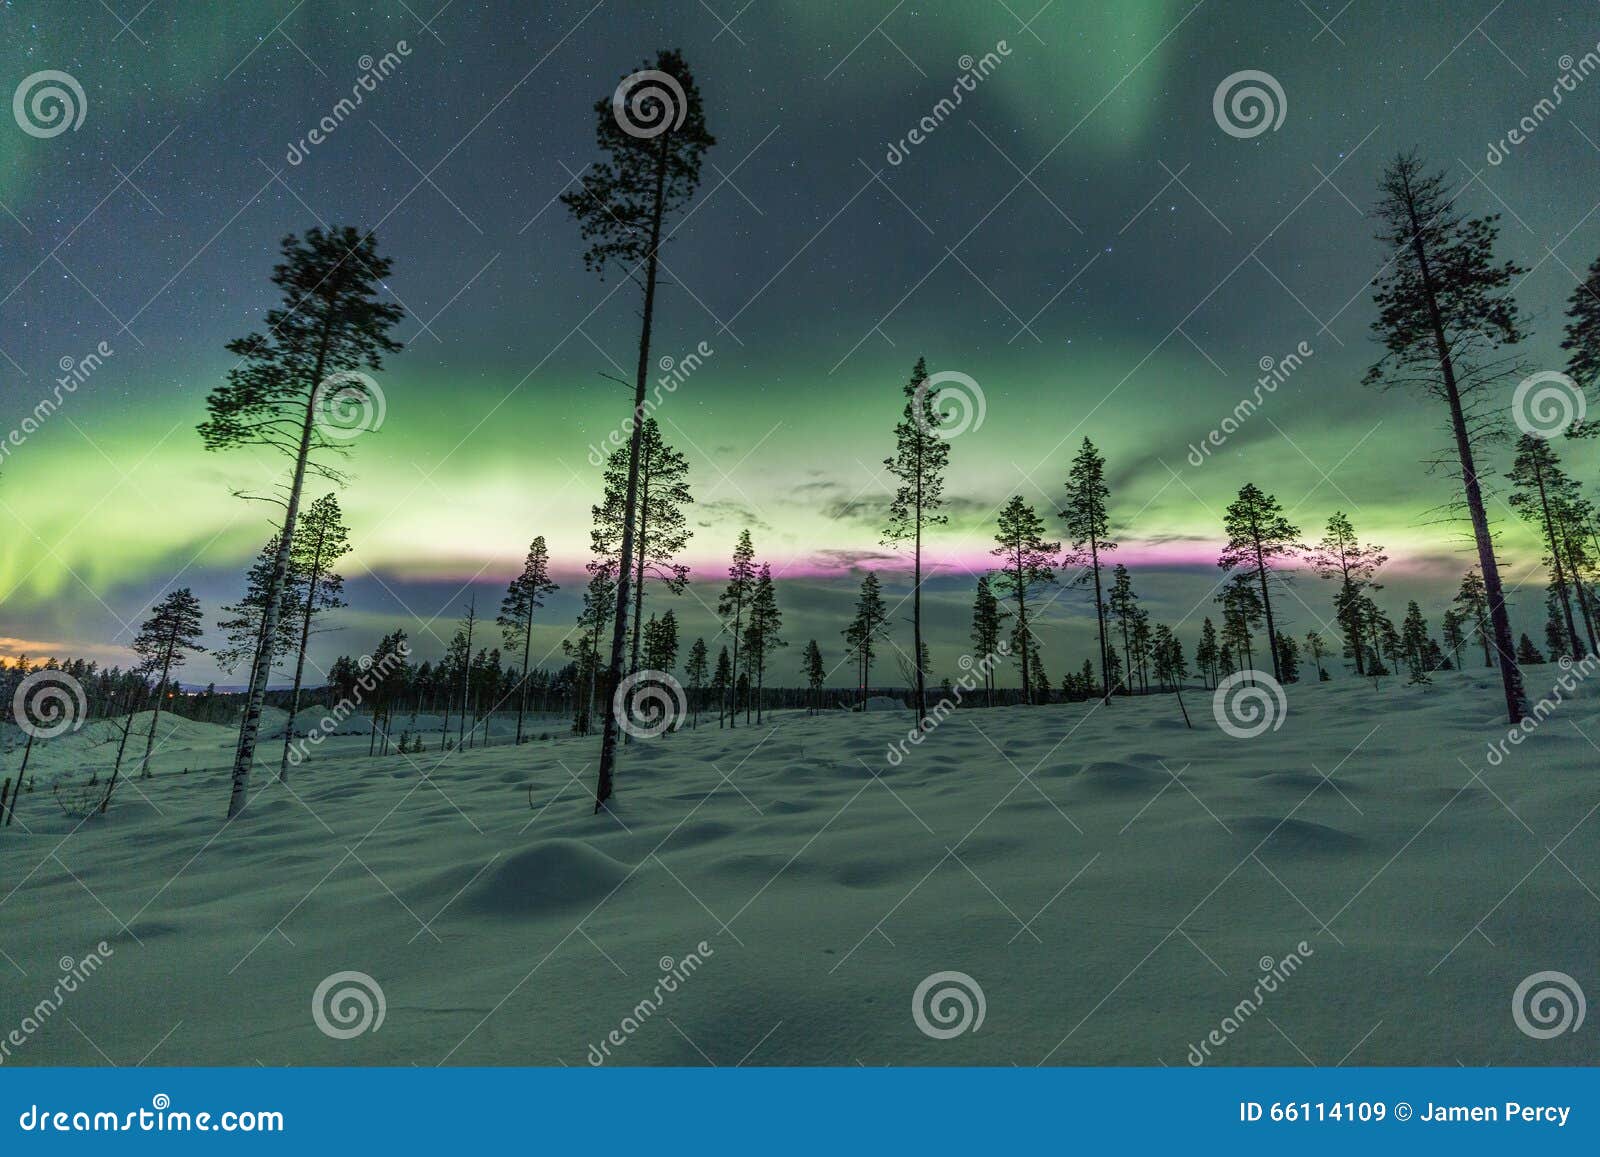 aurora borealis (northern lights) in finland, lapland forest